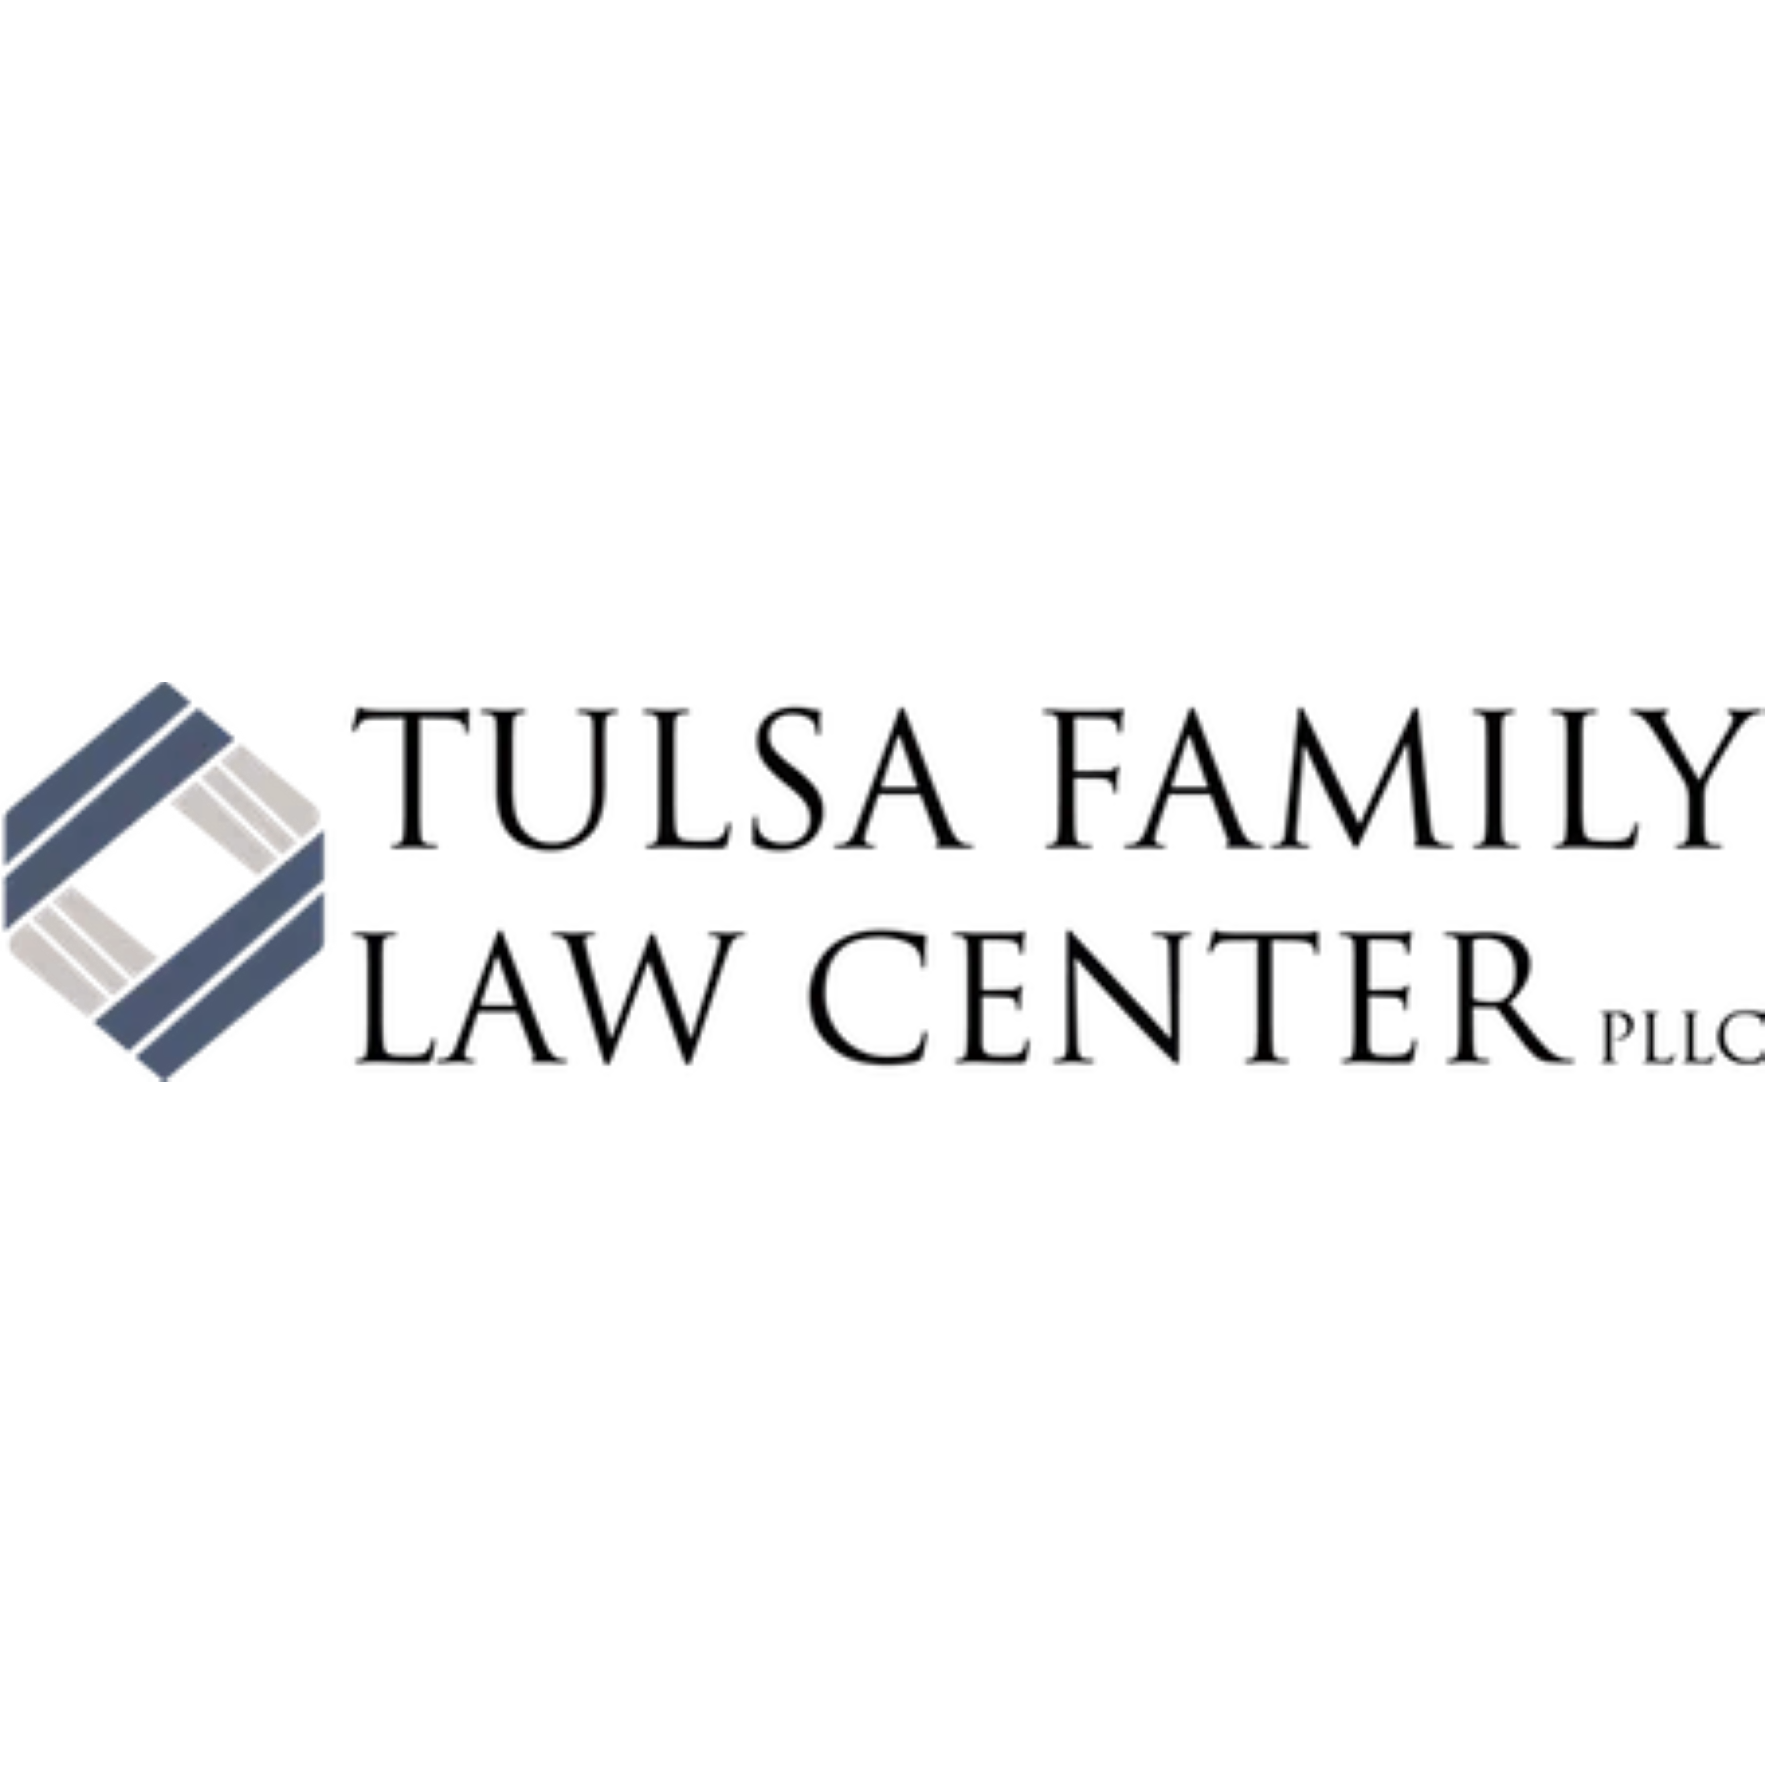 Tulsa Family Law Center, PLLC - Tulsa, OK 74103 - (918)701-1990 | ShowMeLocal.com